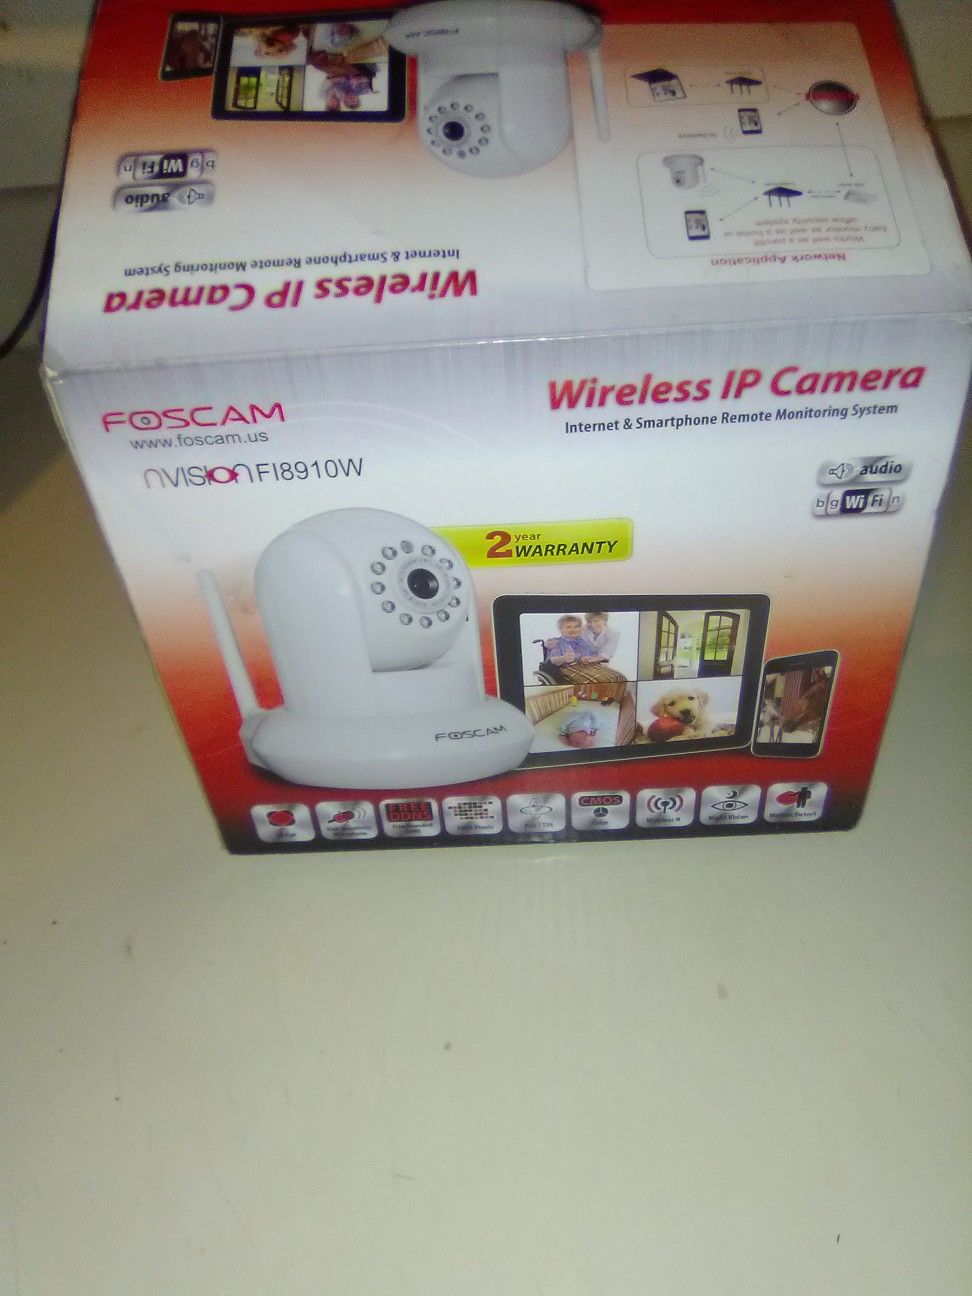 Foscam wireless ip camera